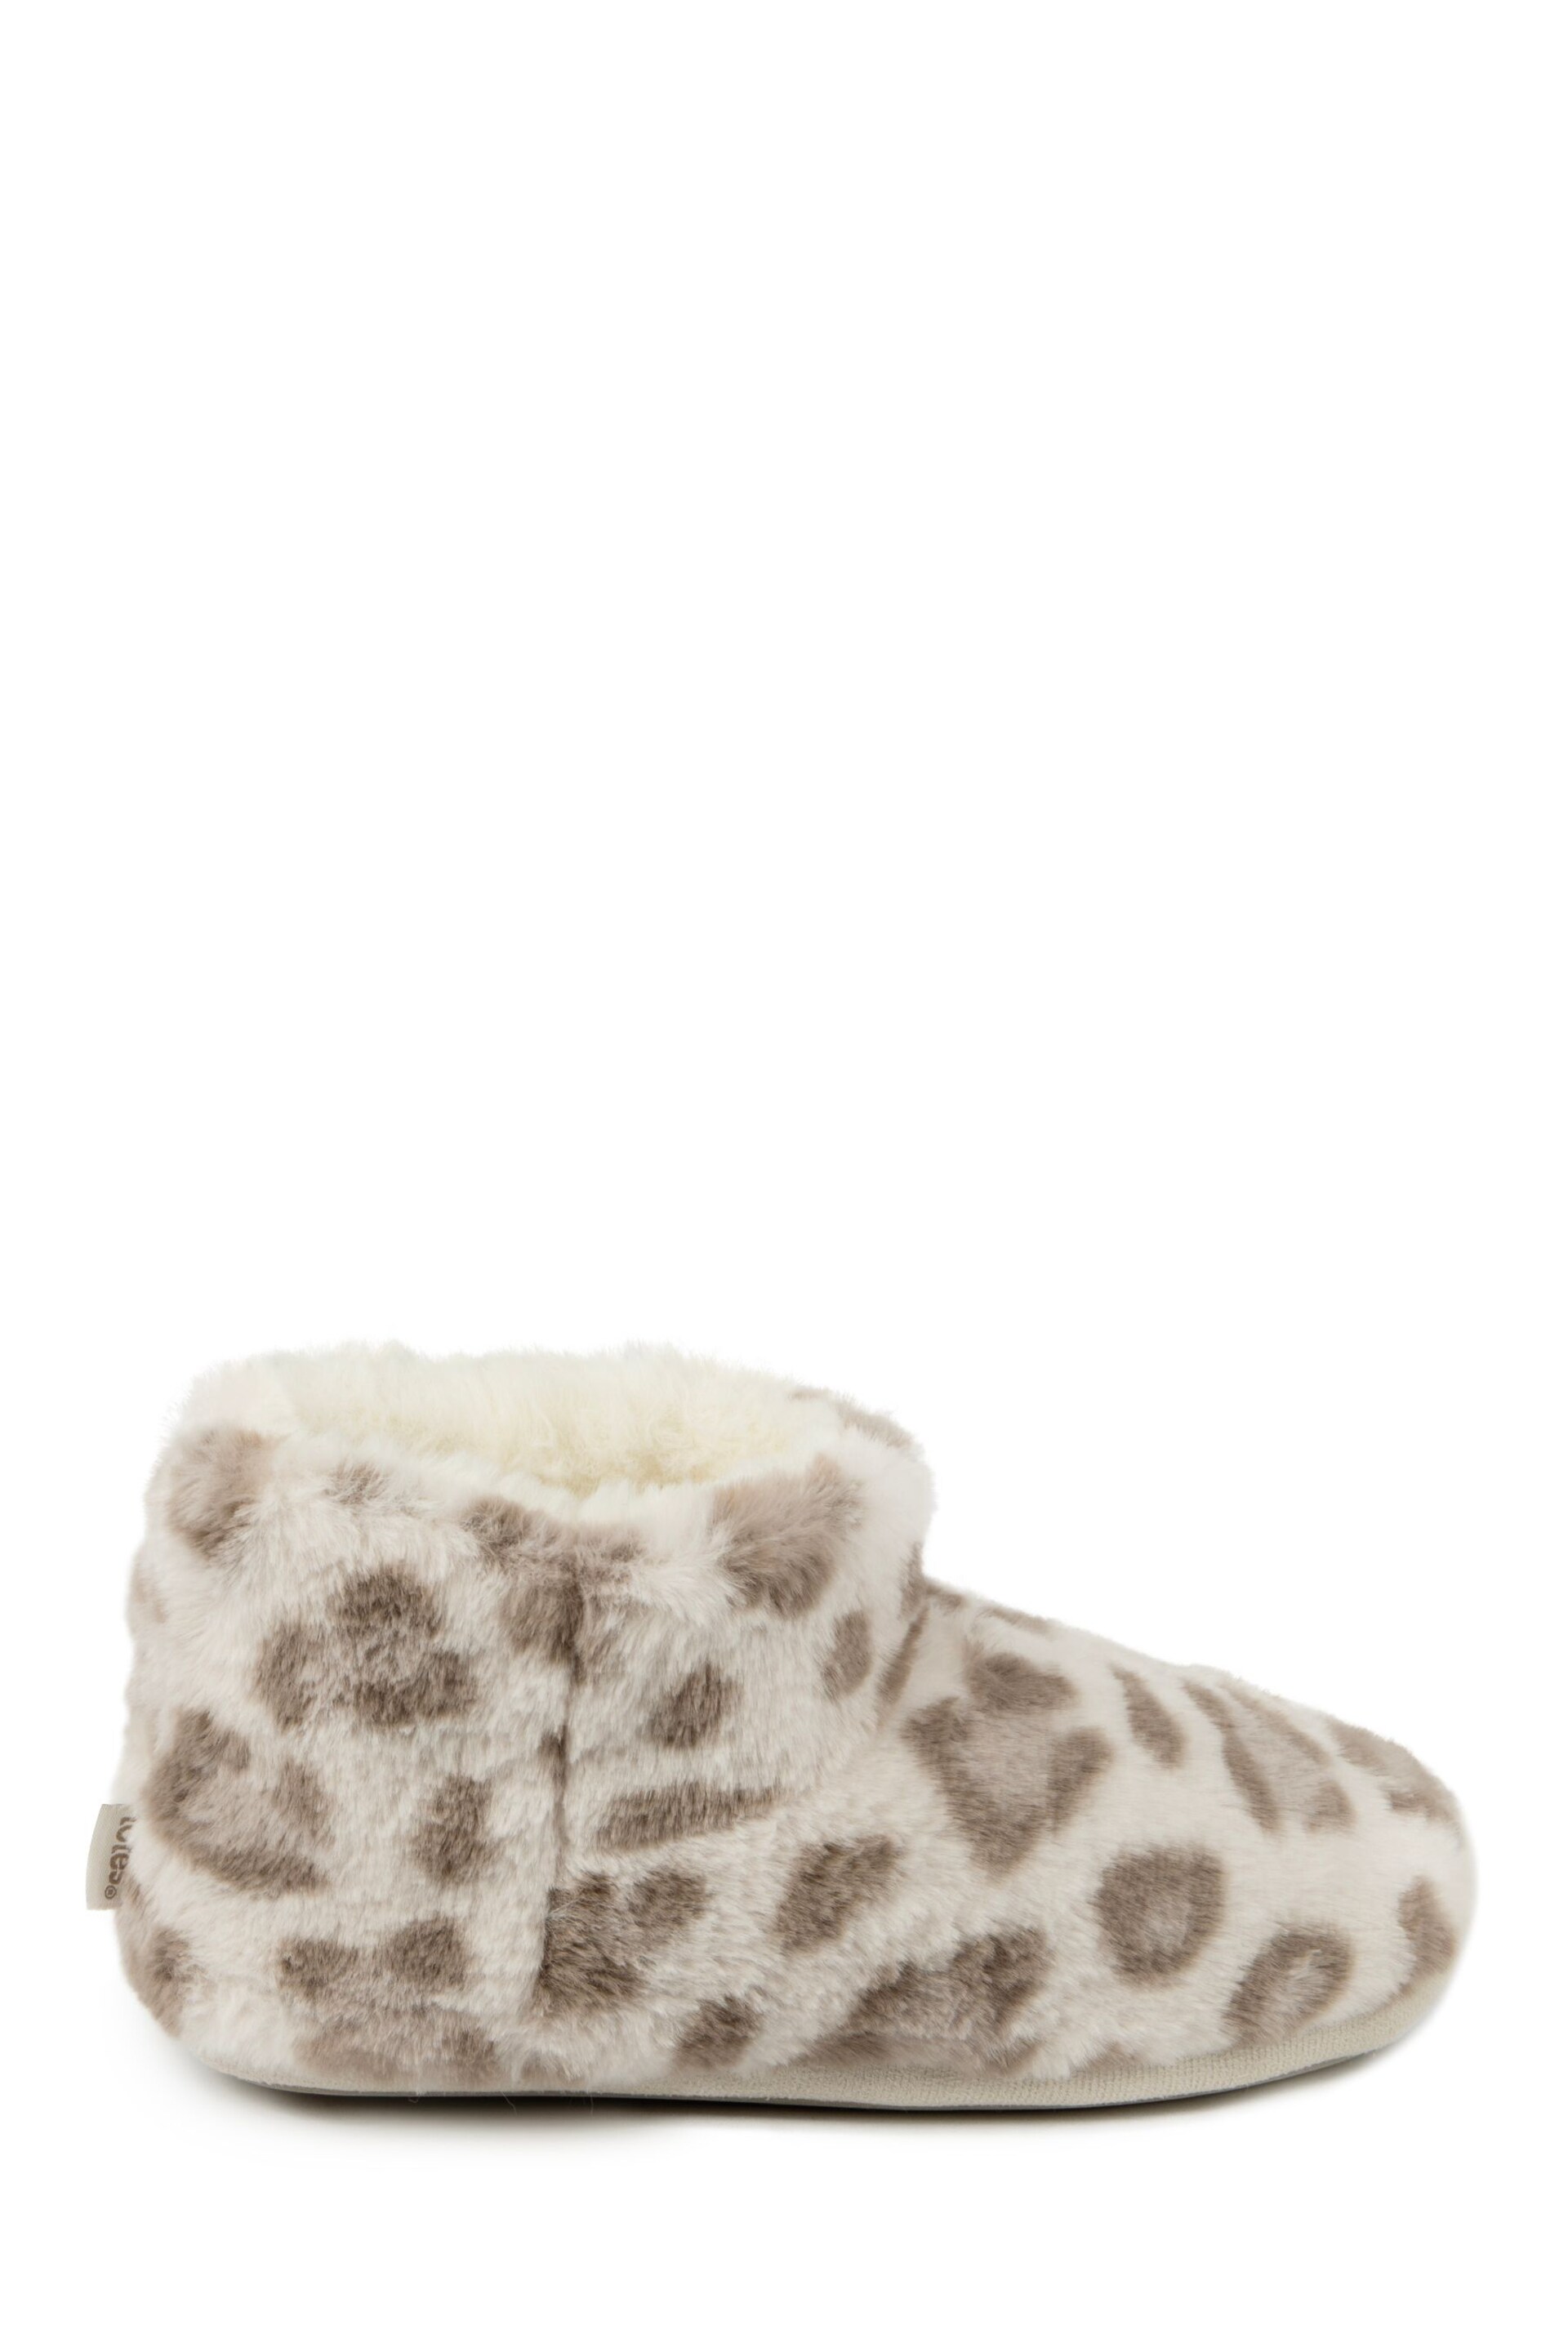 Totes Animal Ladies Faux Fur Animal Short Boot Slippers - Image 2 of 5